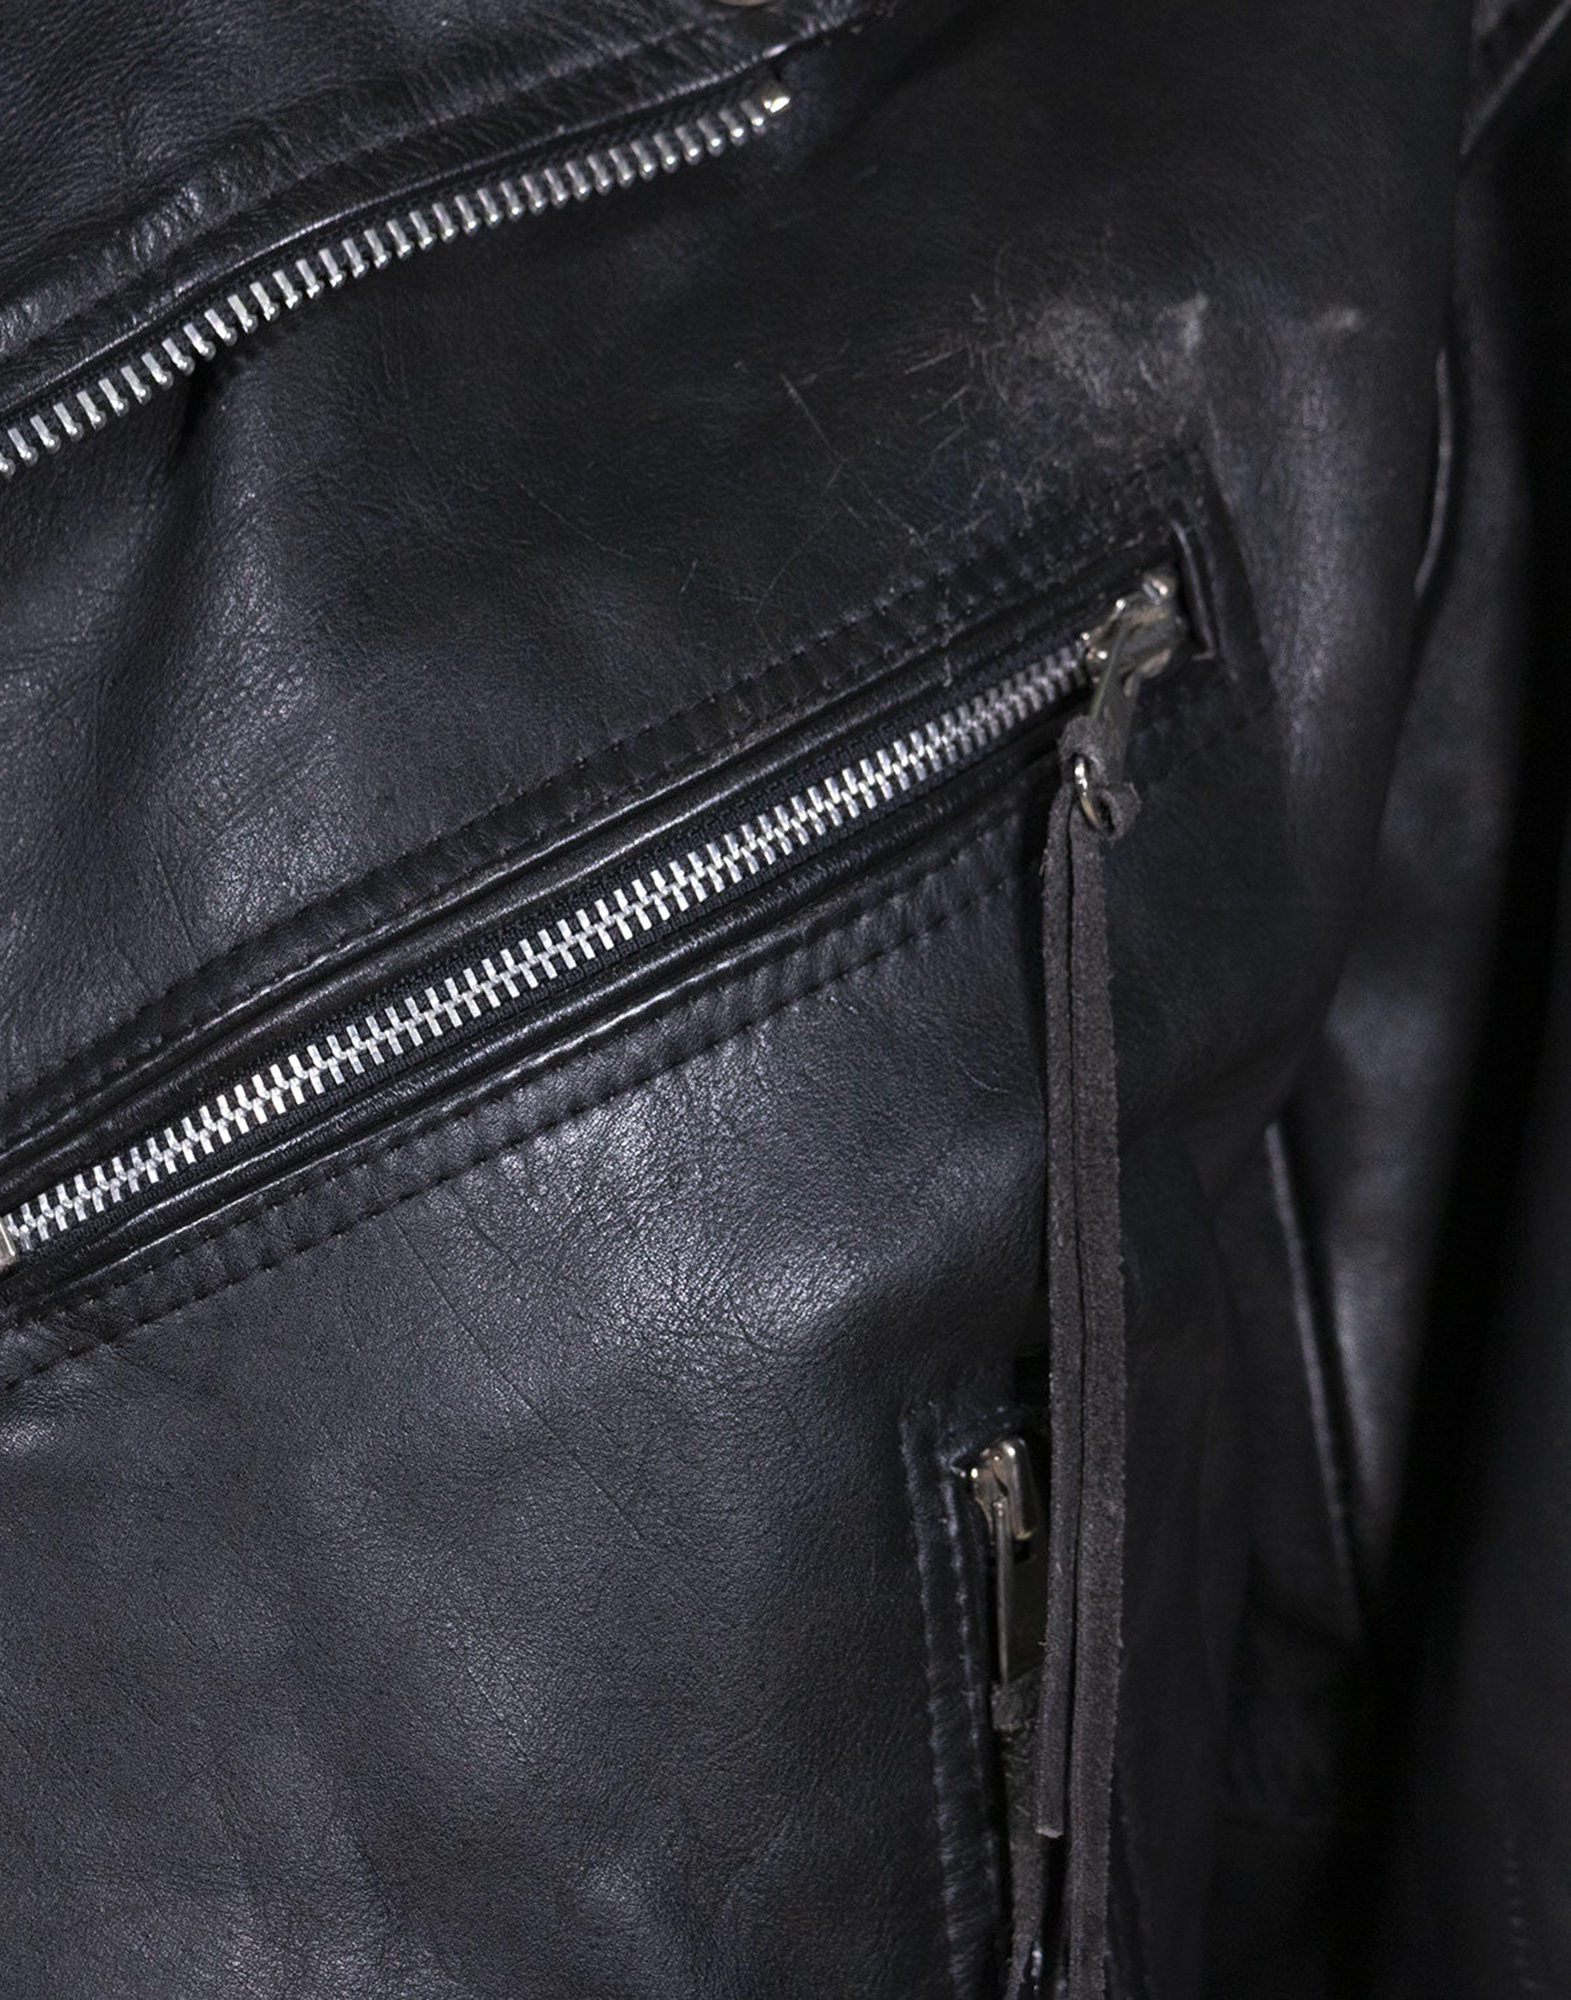 Vanguard Leather - Chiodo in pelle anni '80